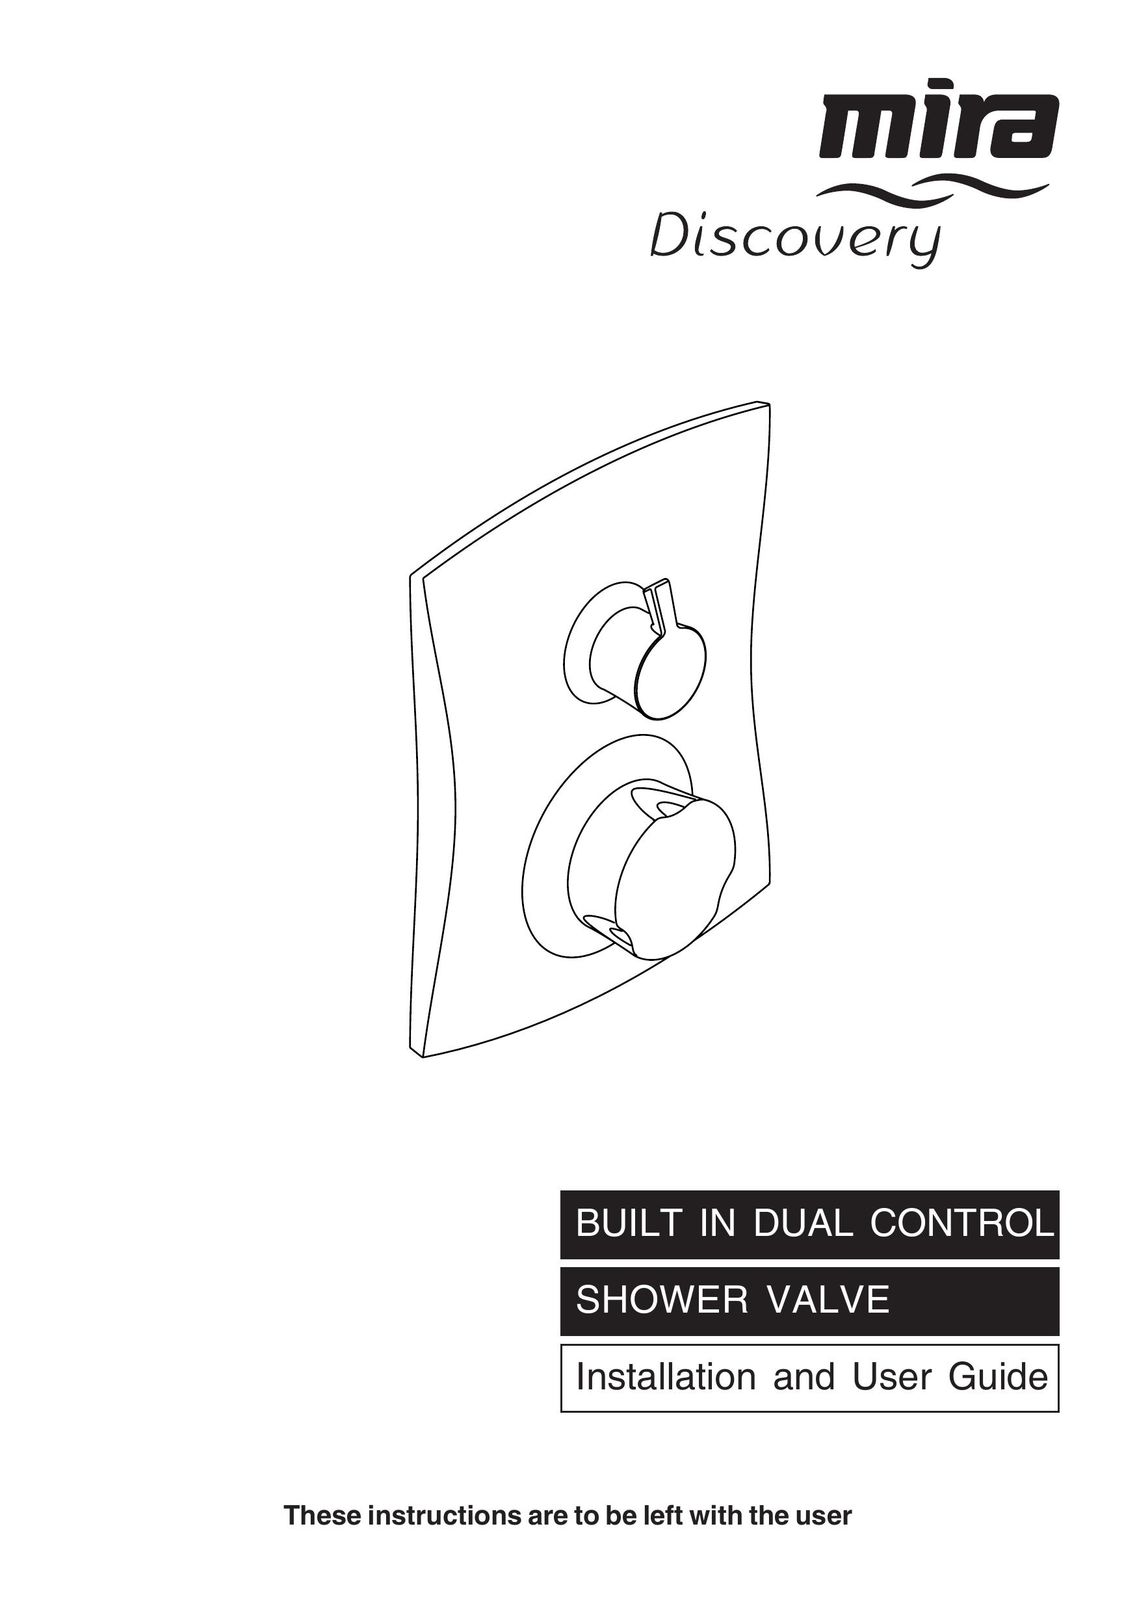 Kohler Discovery Plumbing Product User Manual